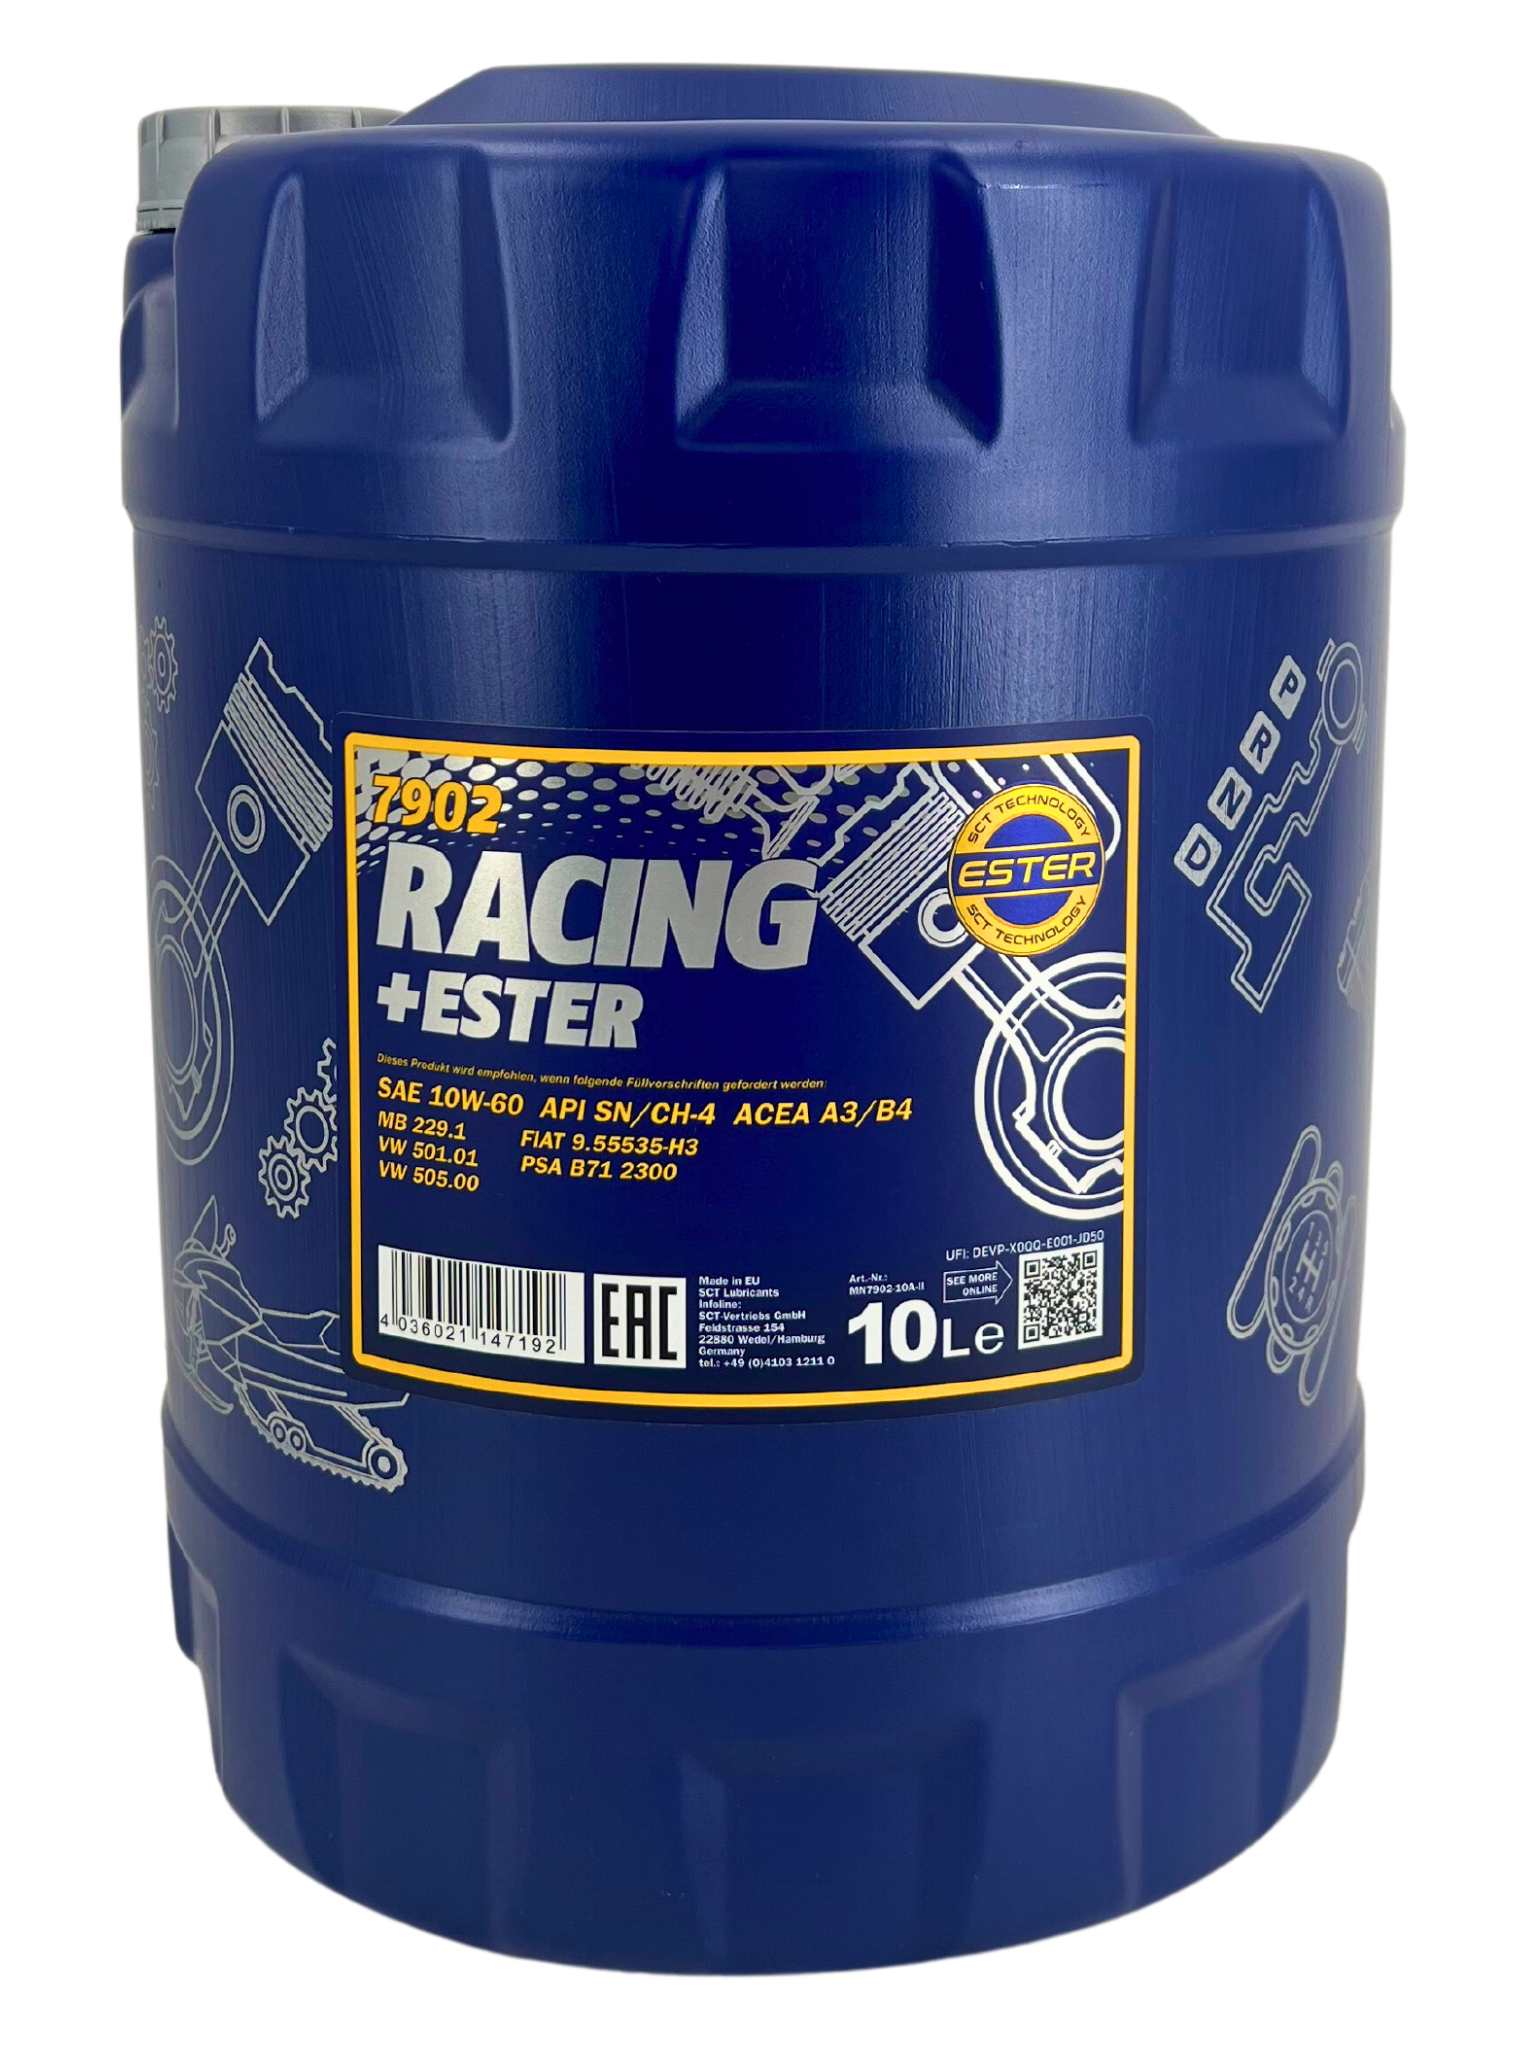 Mannol Racing + Ester 10W-60 10 Liter